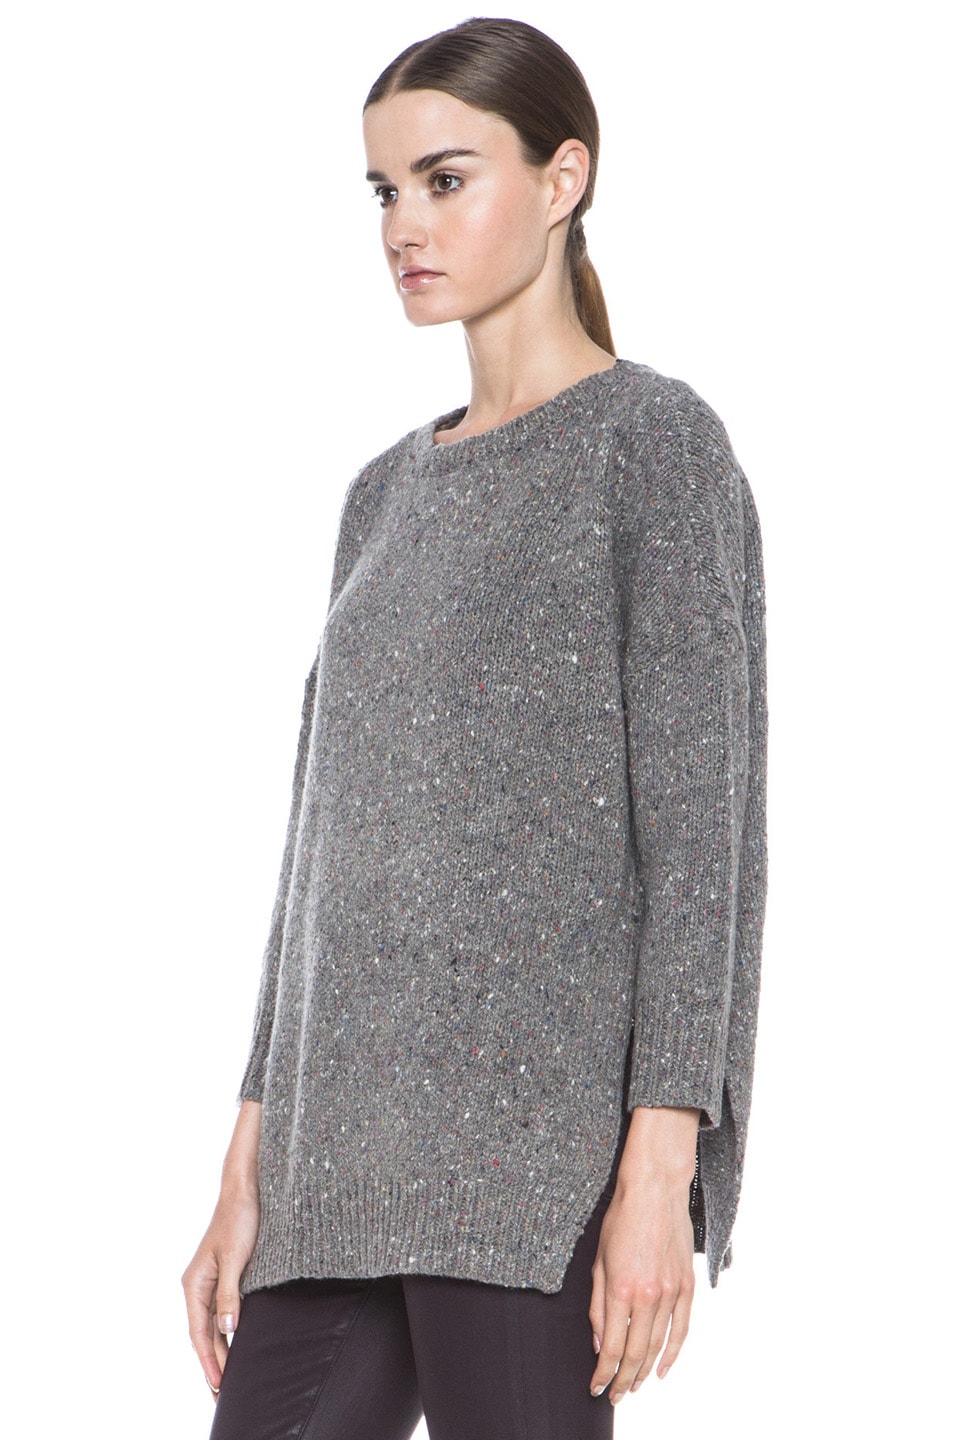 Inhabit Donegal Outdoor Wool-Blend Sweater in Mid-Grey | FWRD